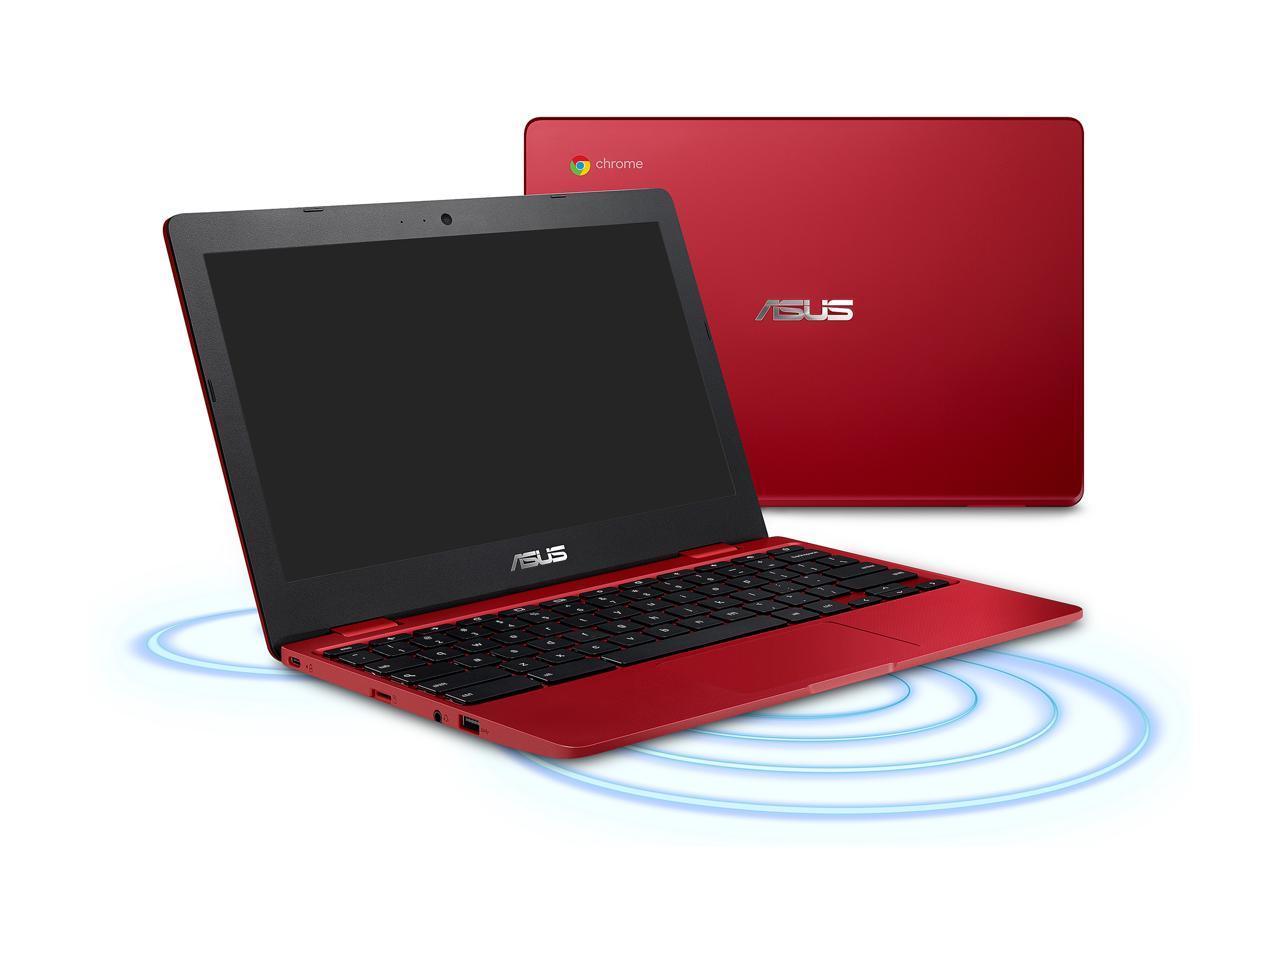 ASUS Chromebook C223NA-DH02-RD 11.6" HD Display, Intel Dual-Core